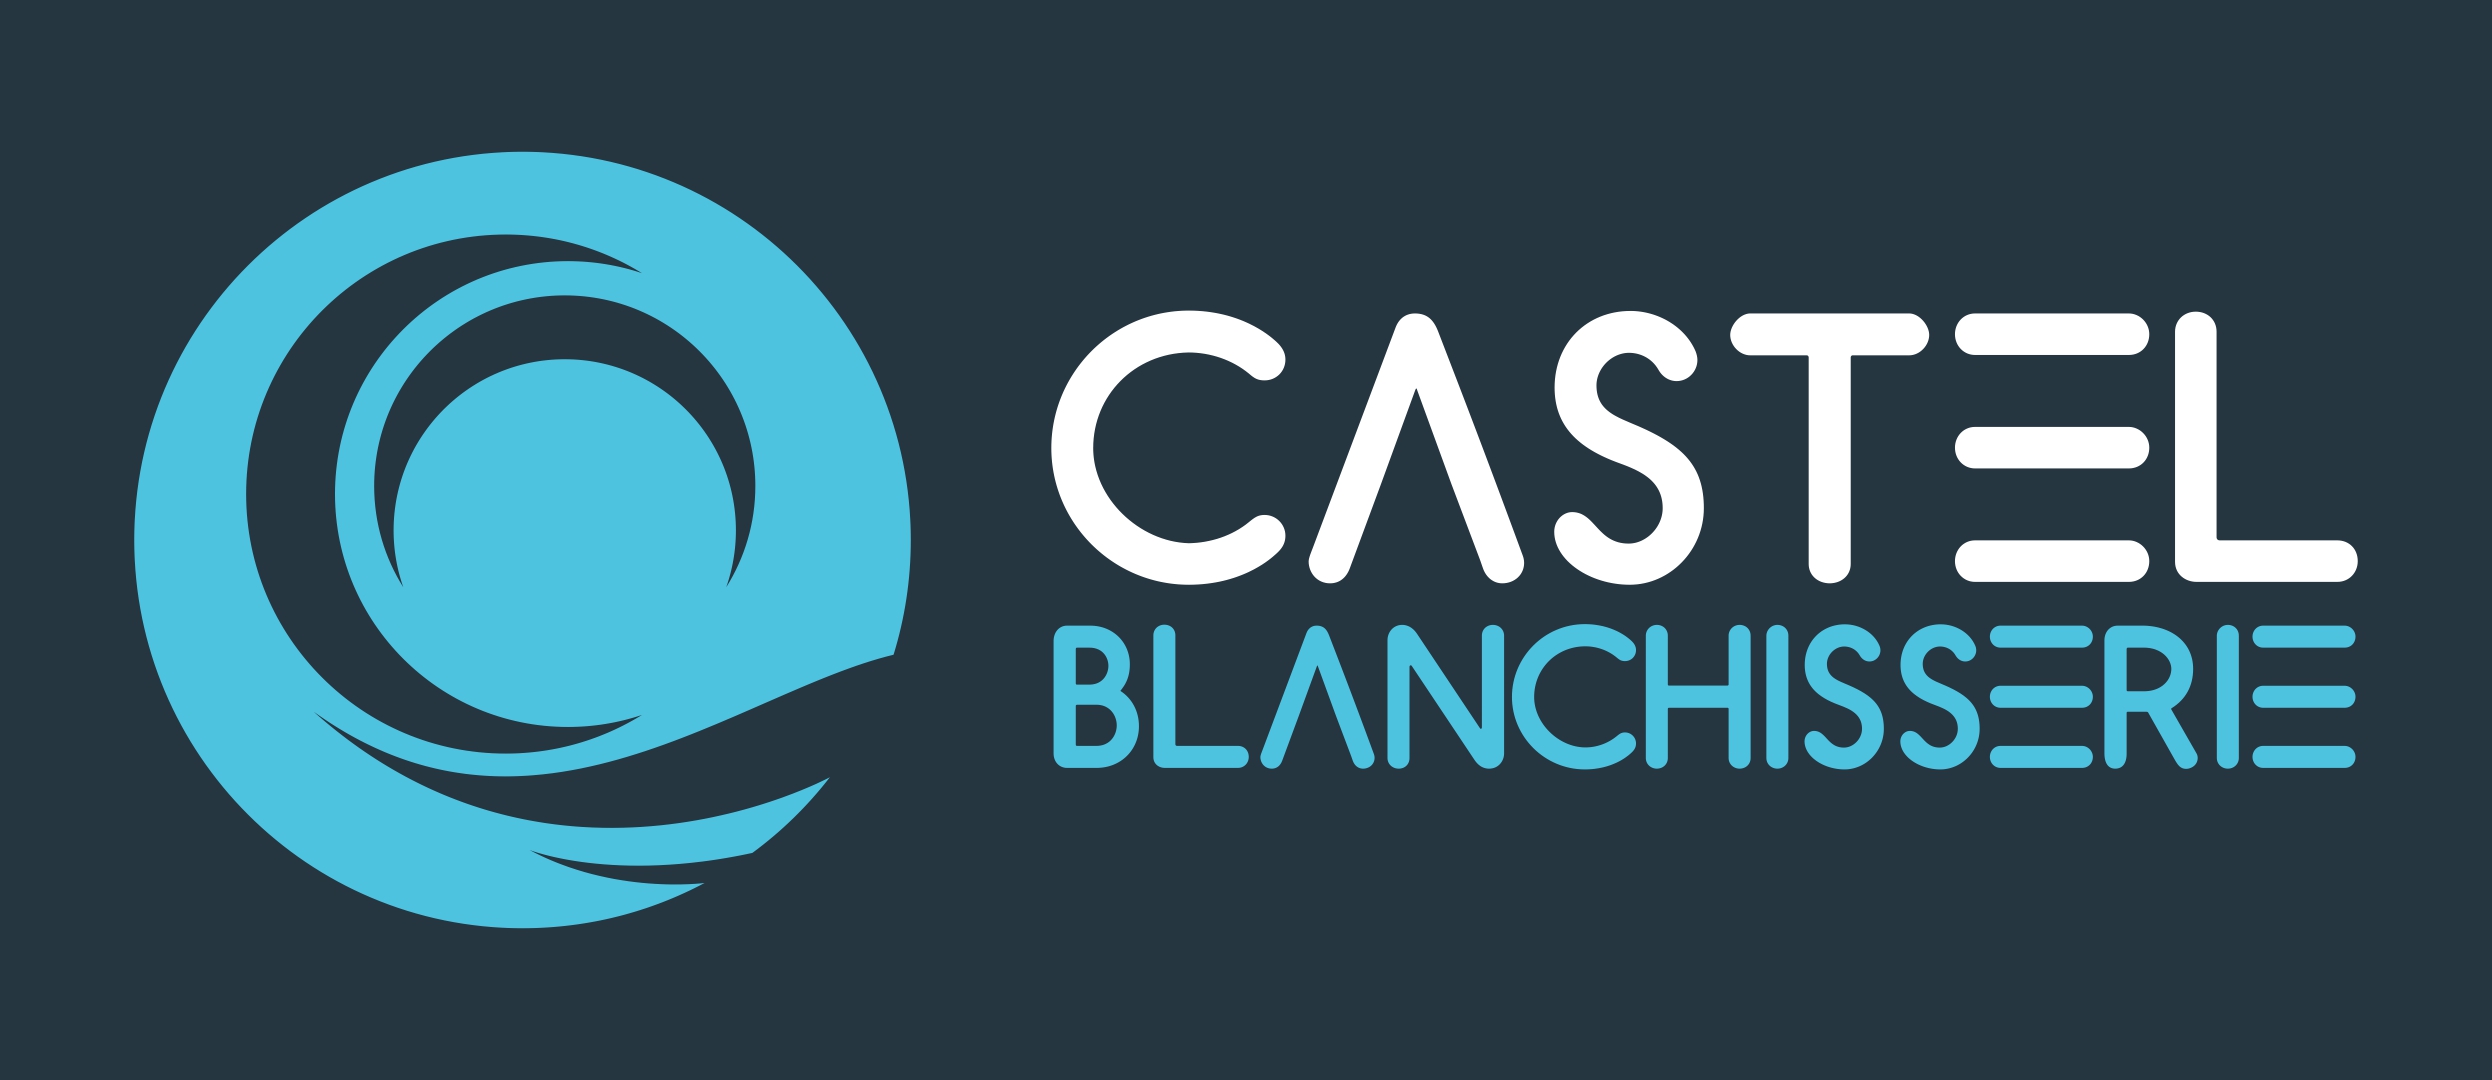 CASTEL_BLANCHISSERIE-Logo Horizontal-Fondnoir (002)